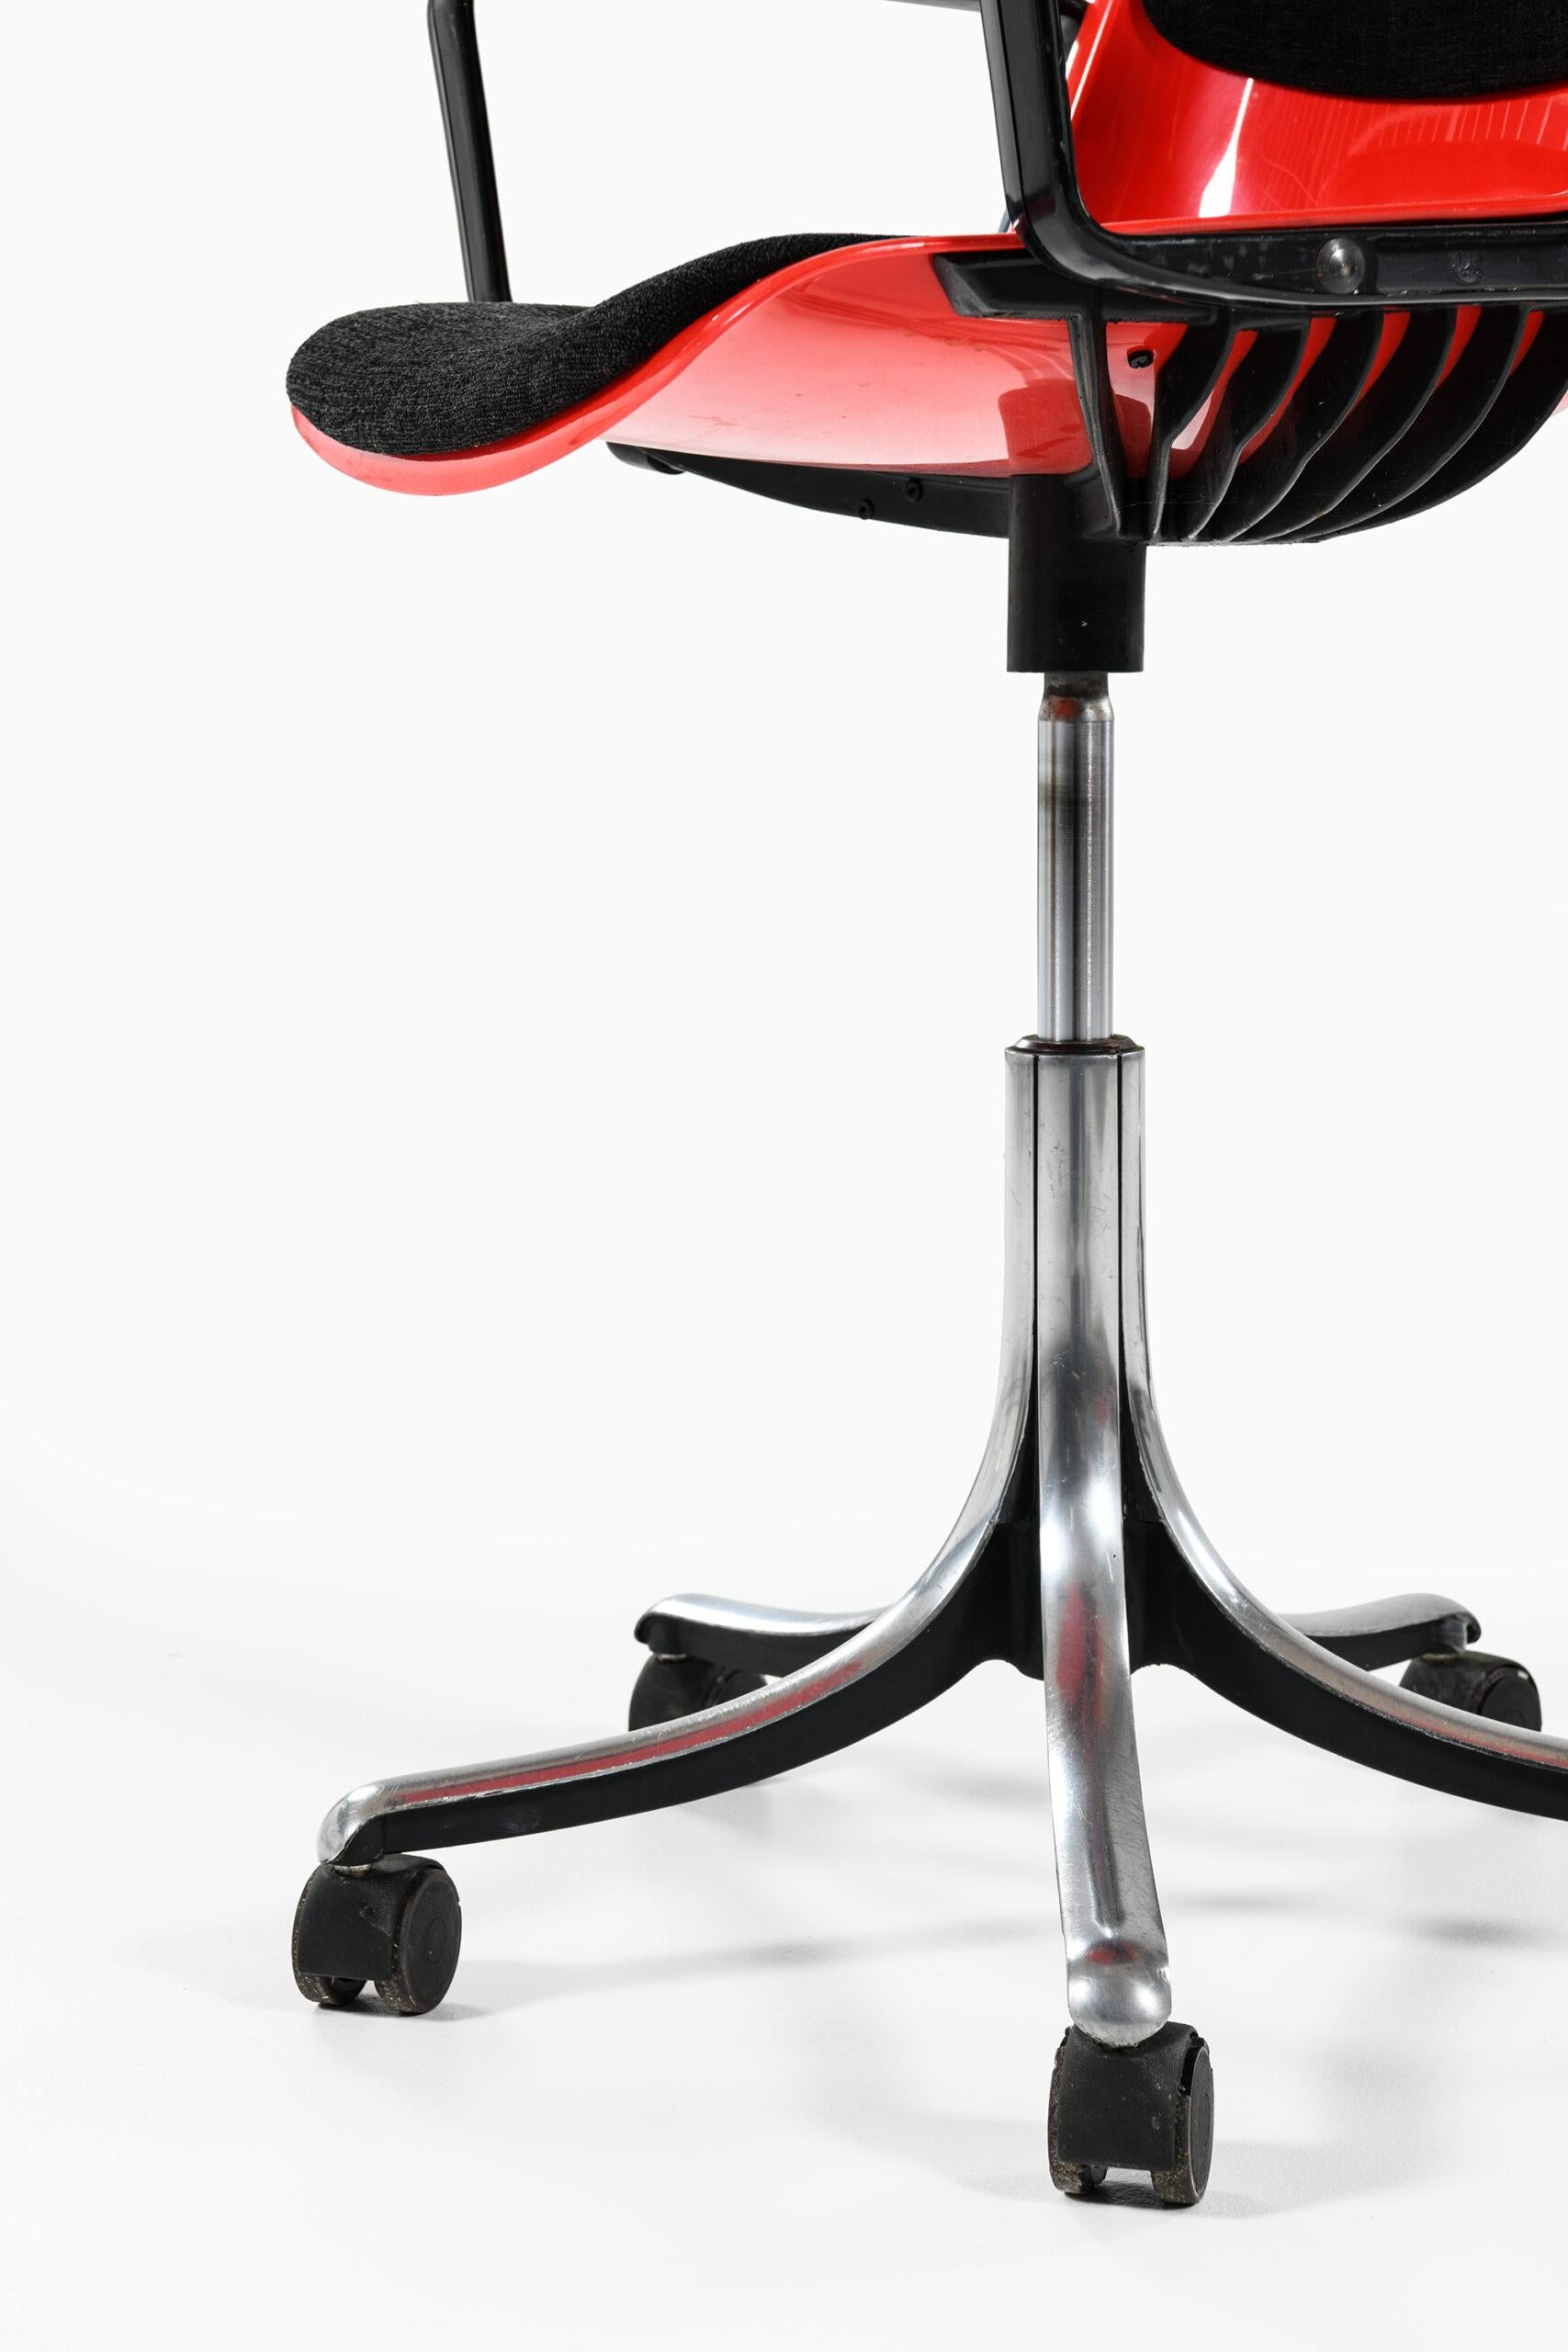 Fabric Osvaldo Borsani Office Chairs Model Modus Produced in Tecno in Italy